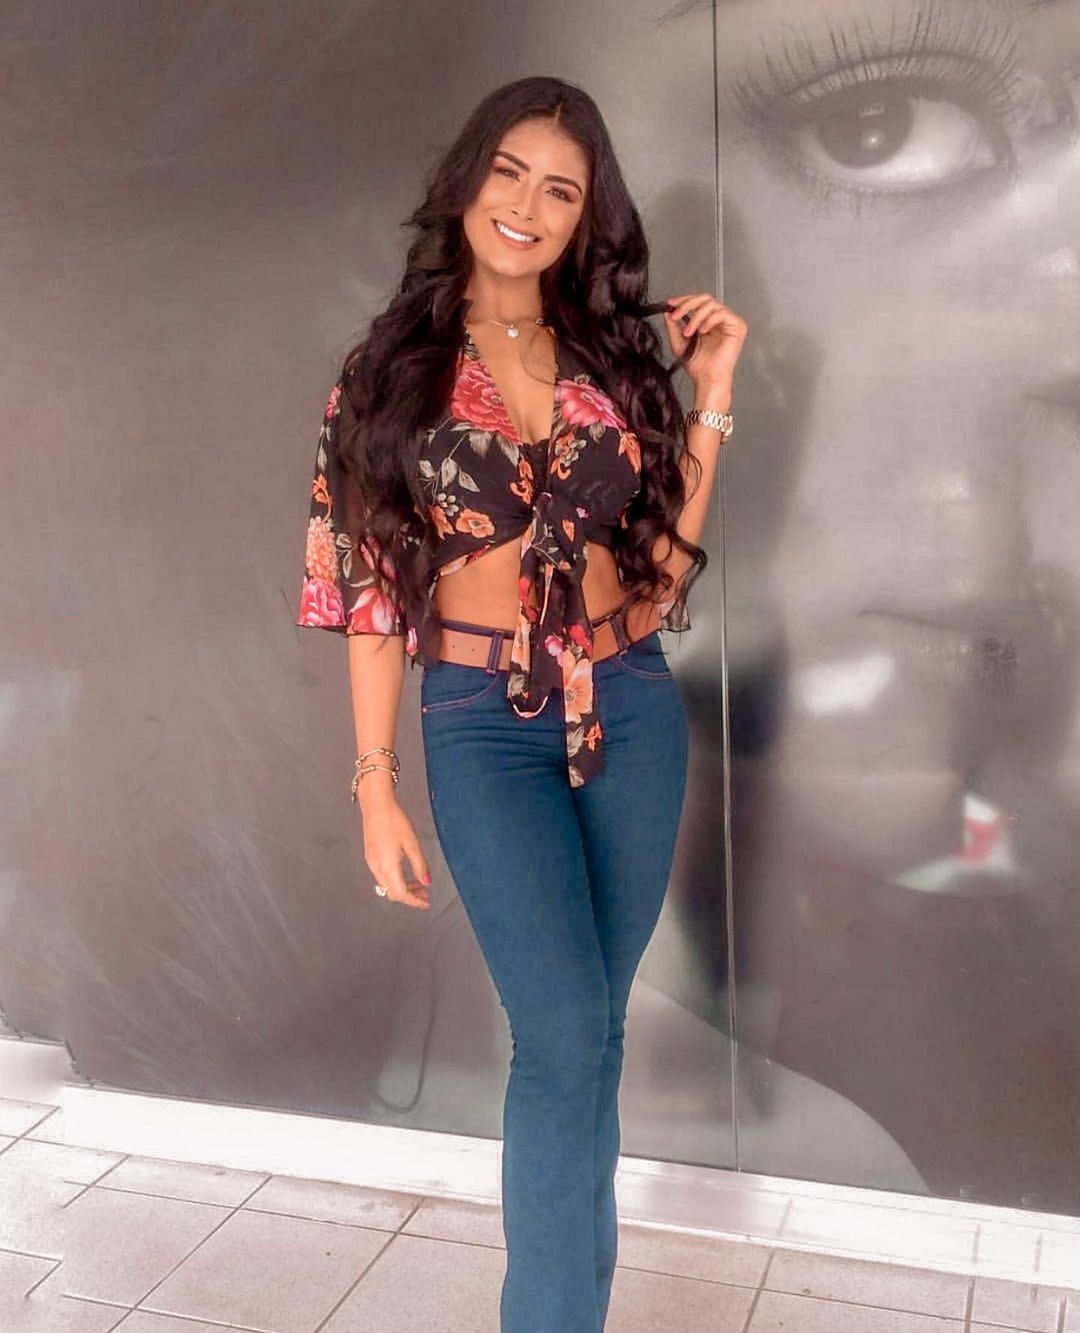 esthefane souza, top 20 de miss brasil mundo 2019. - Página 3 21282116